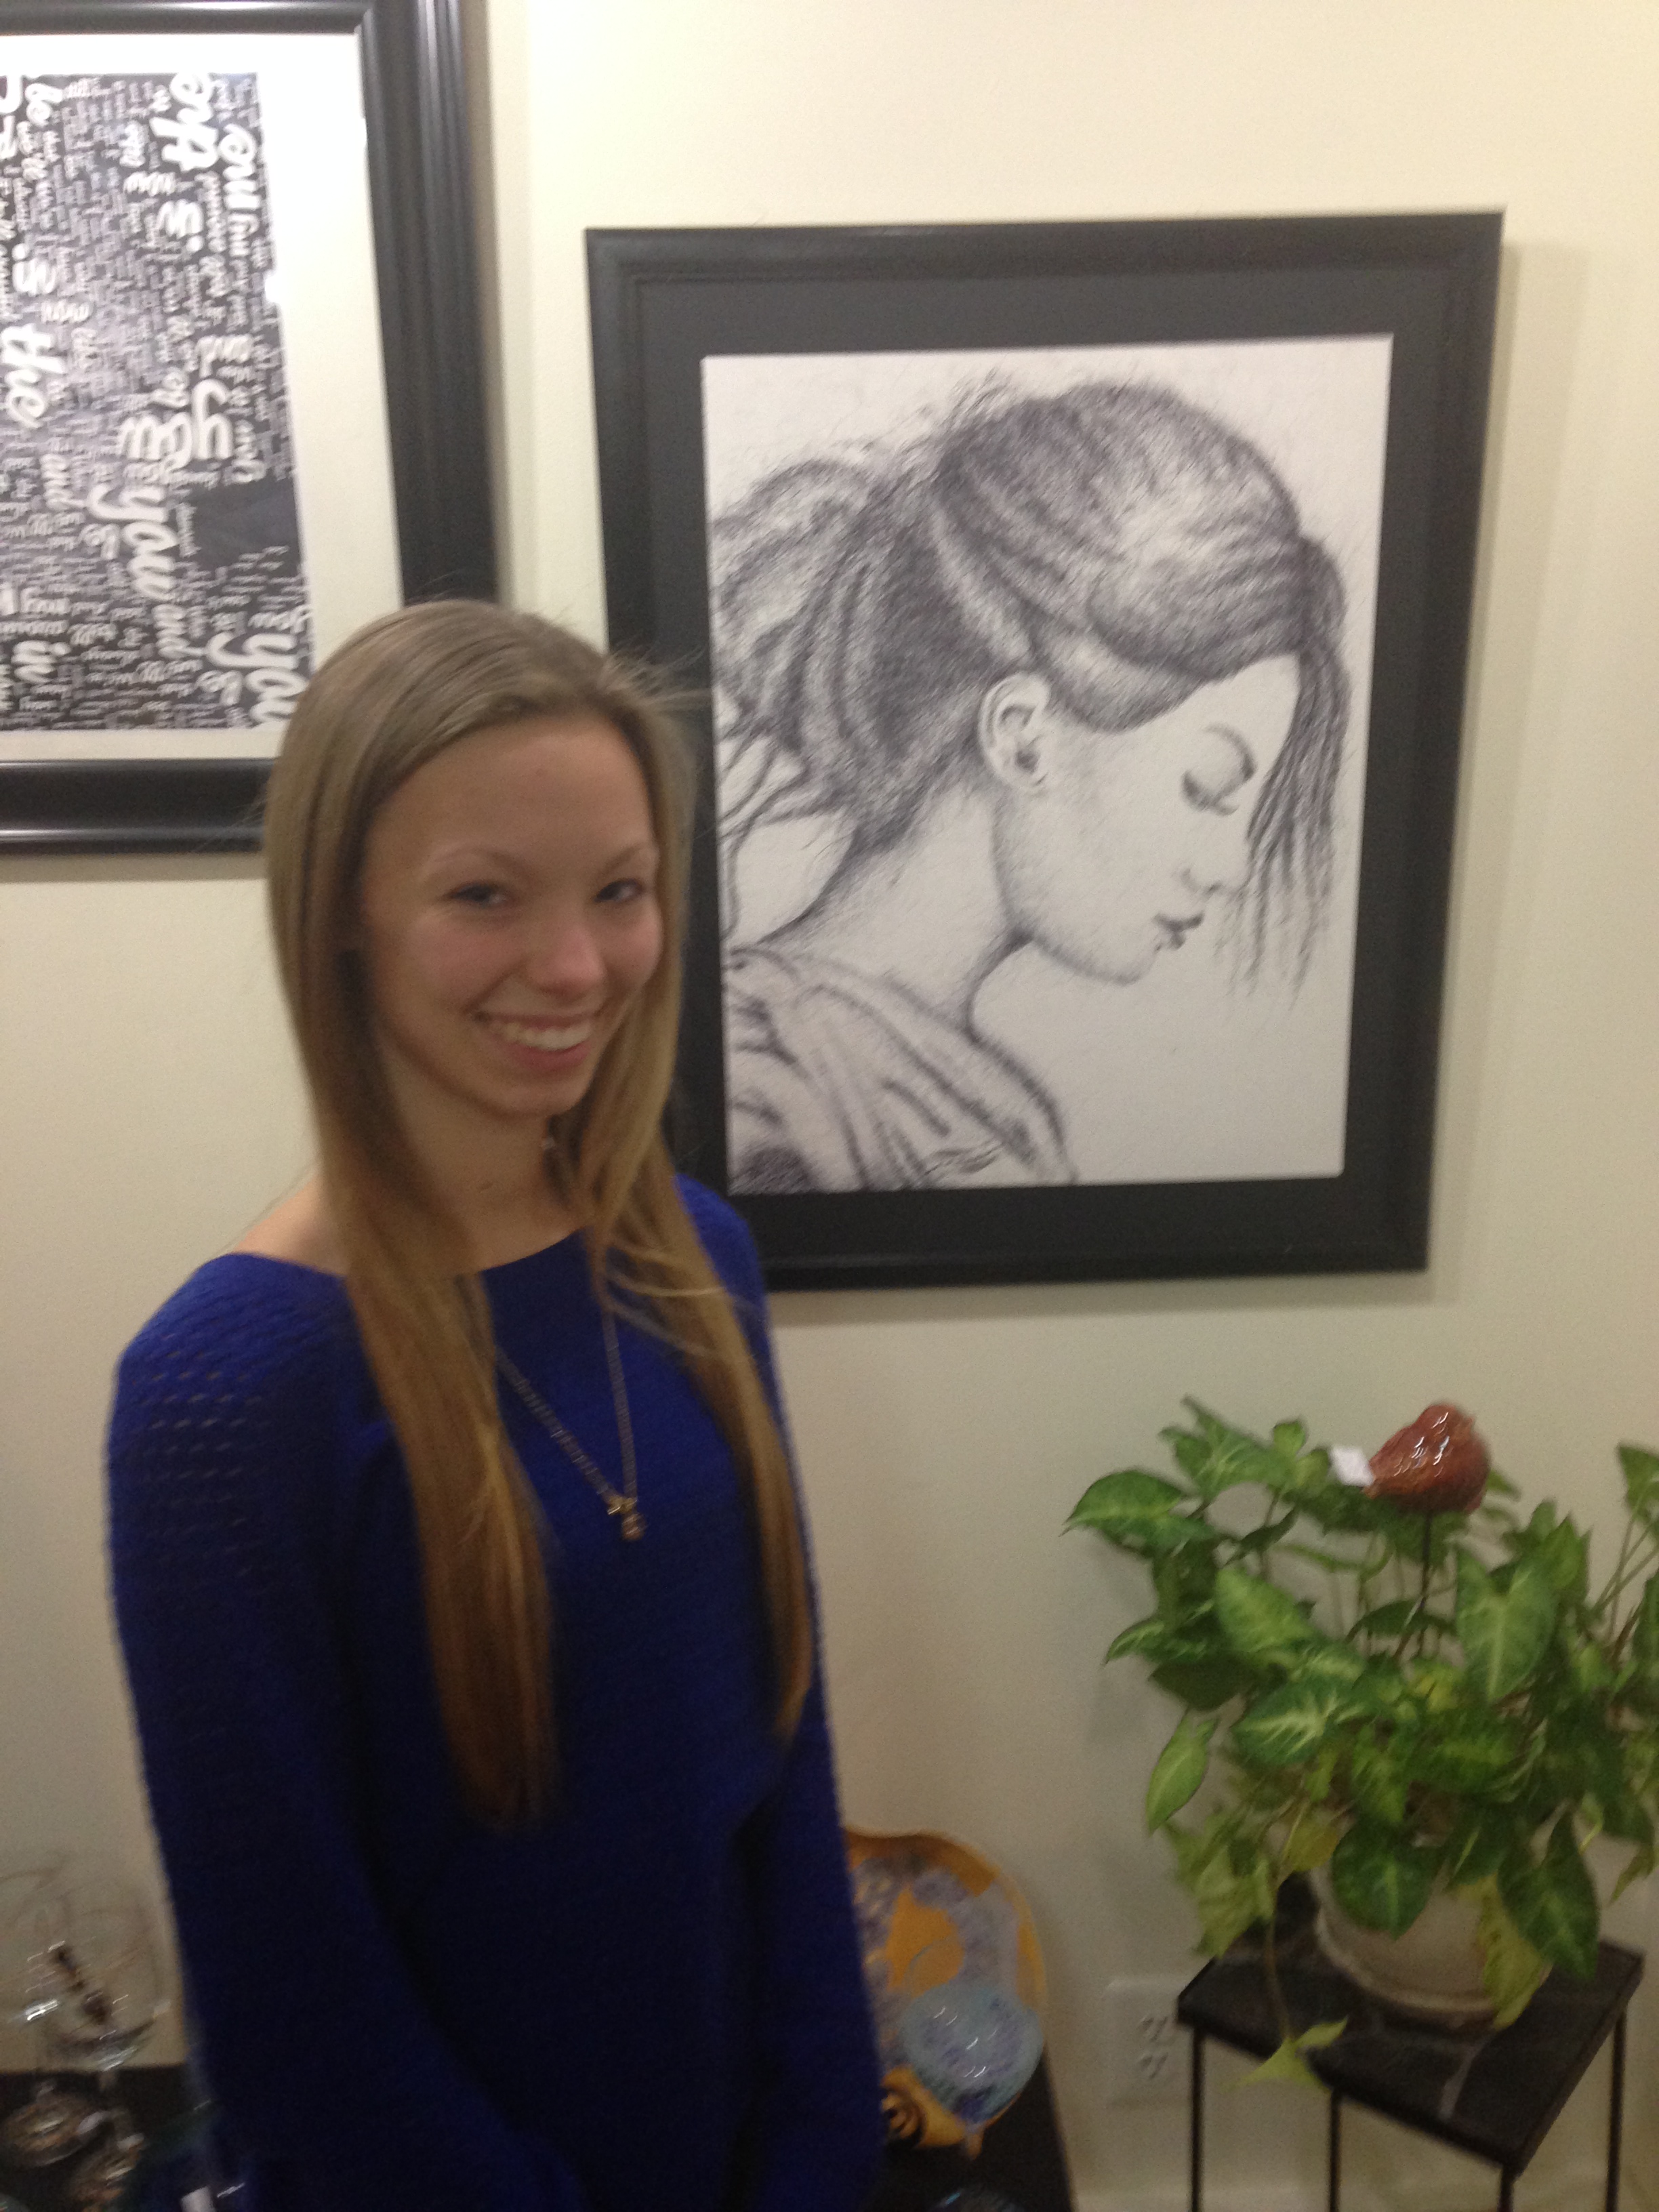 Creative Courage exhibit recognizes student artwork